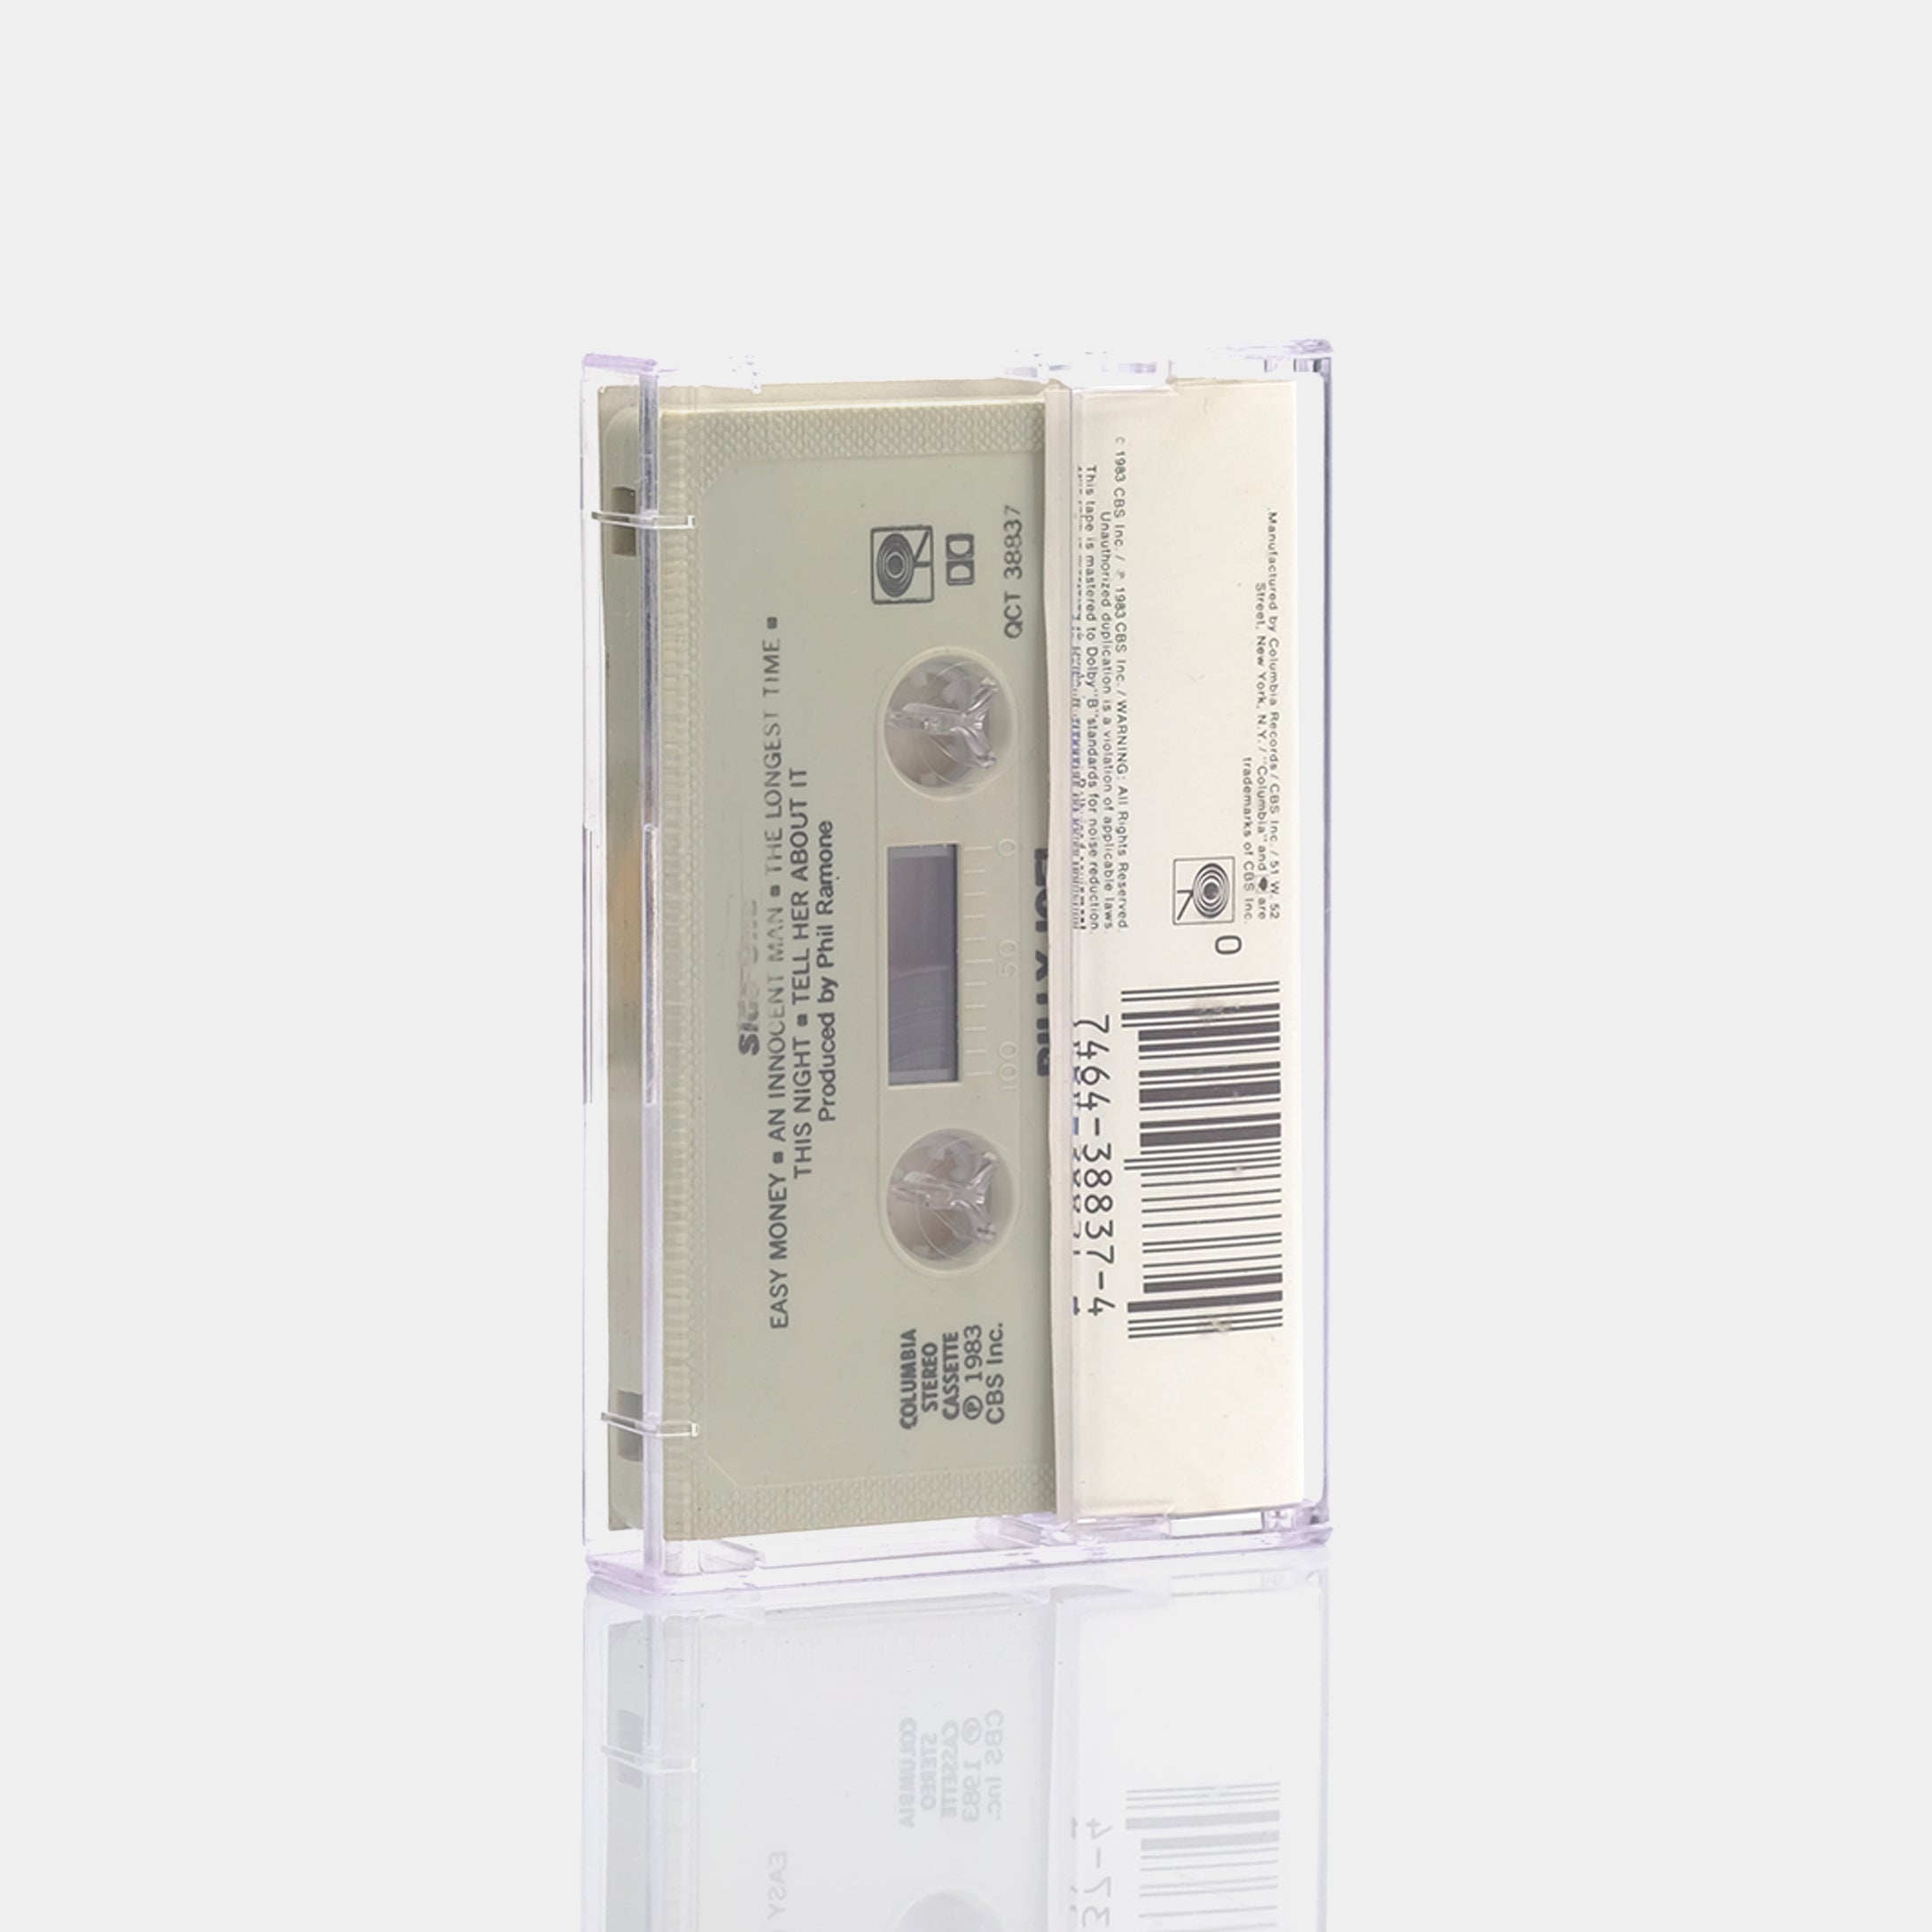 Billy Joel - An Innocent Man Cassette Tape